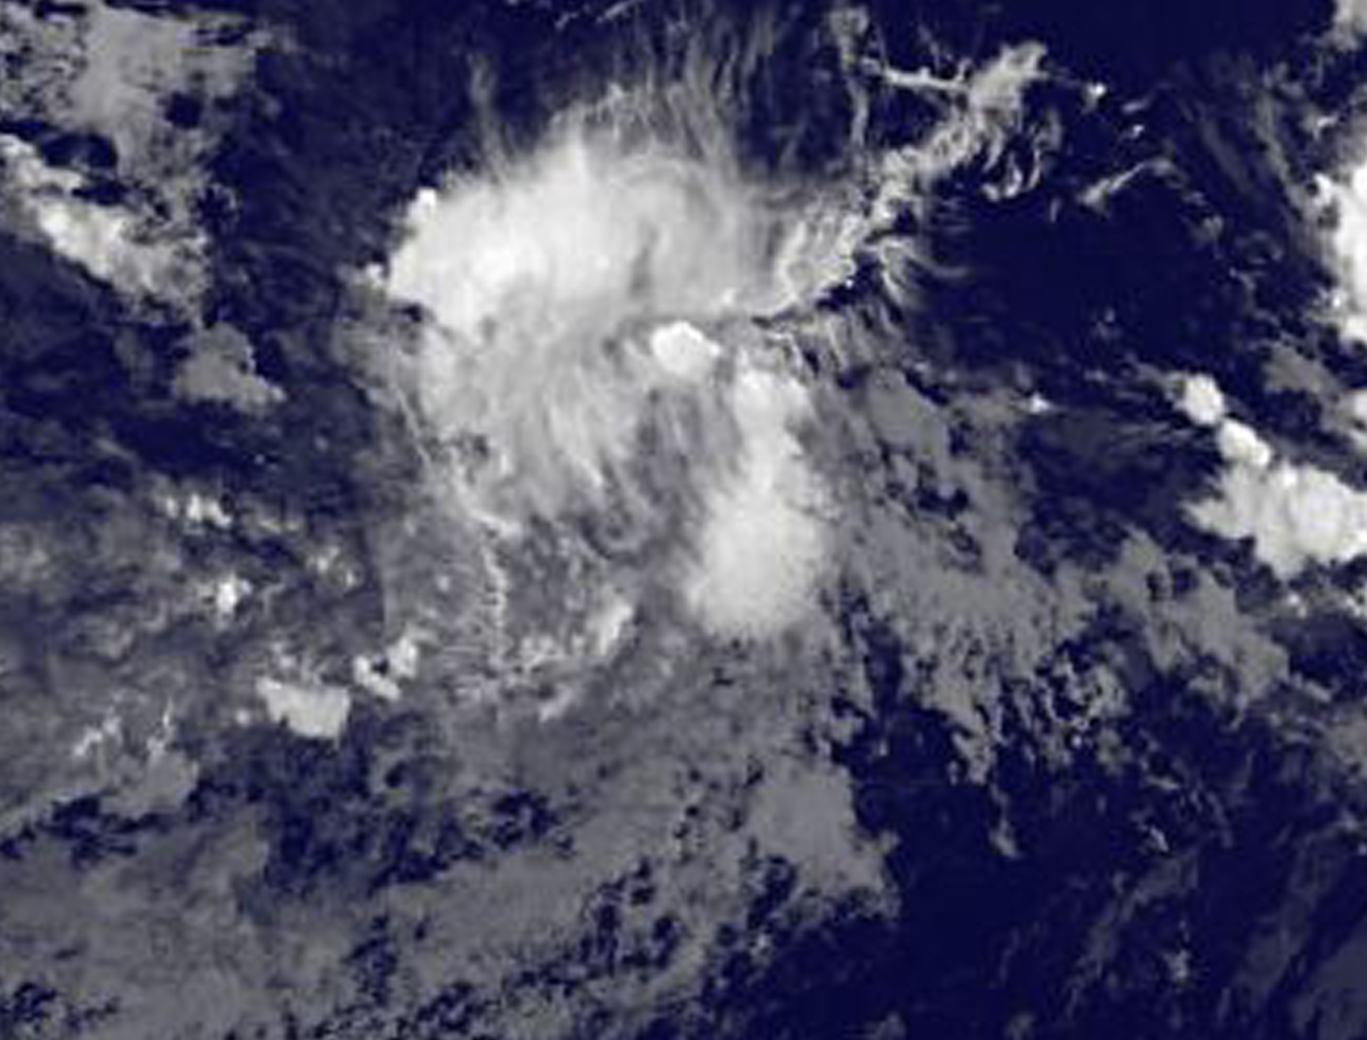 satellite view of hurricane over ocean